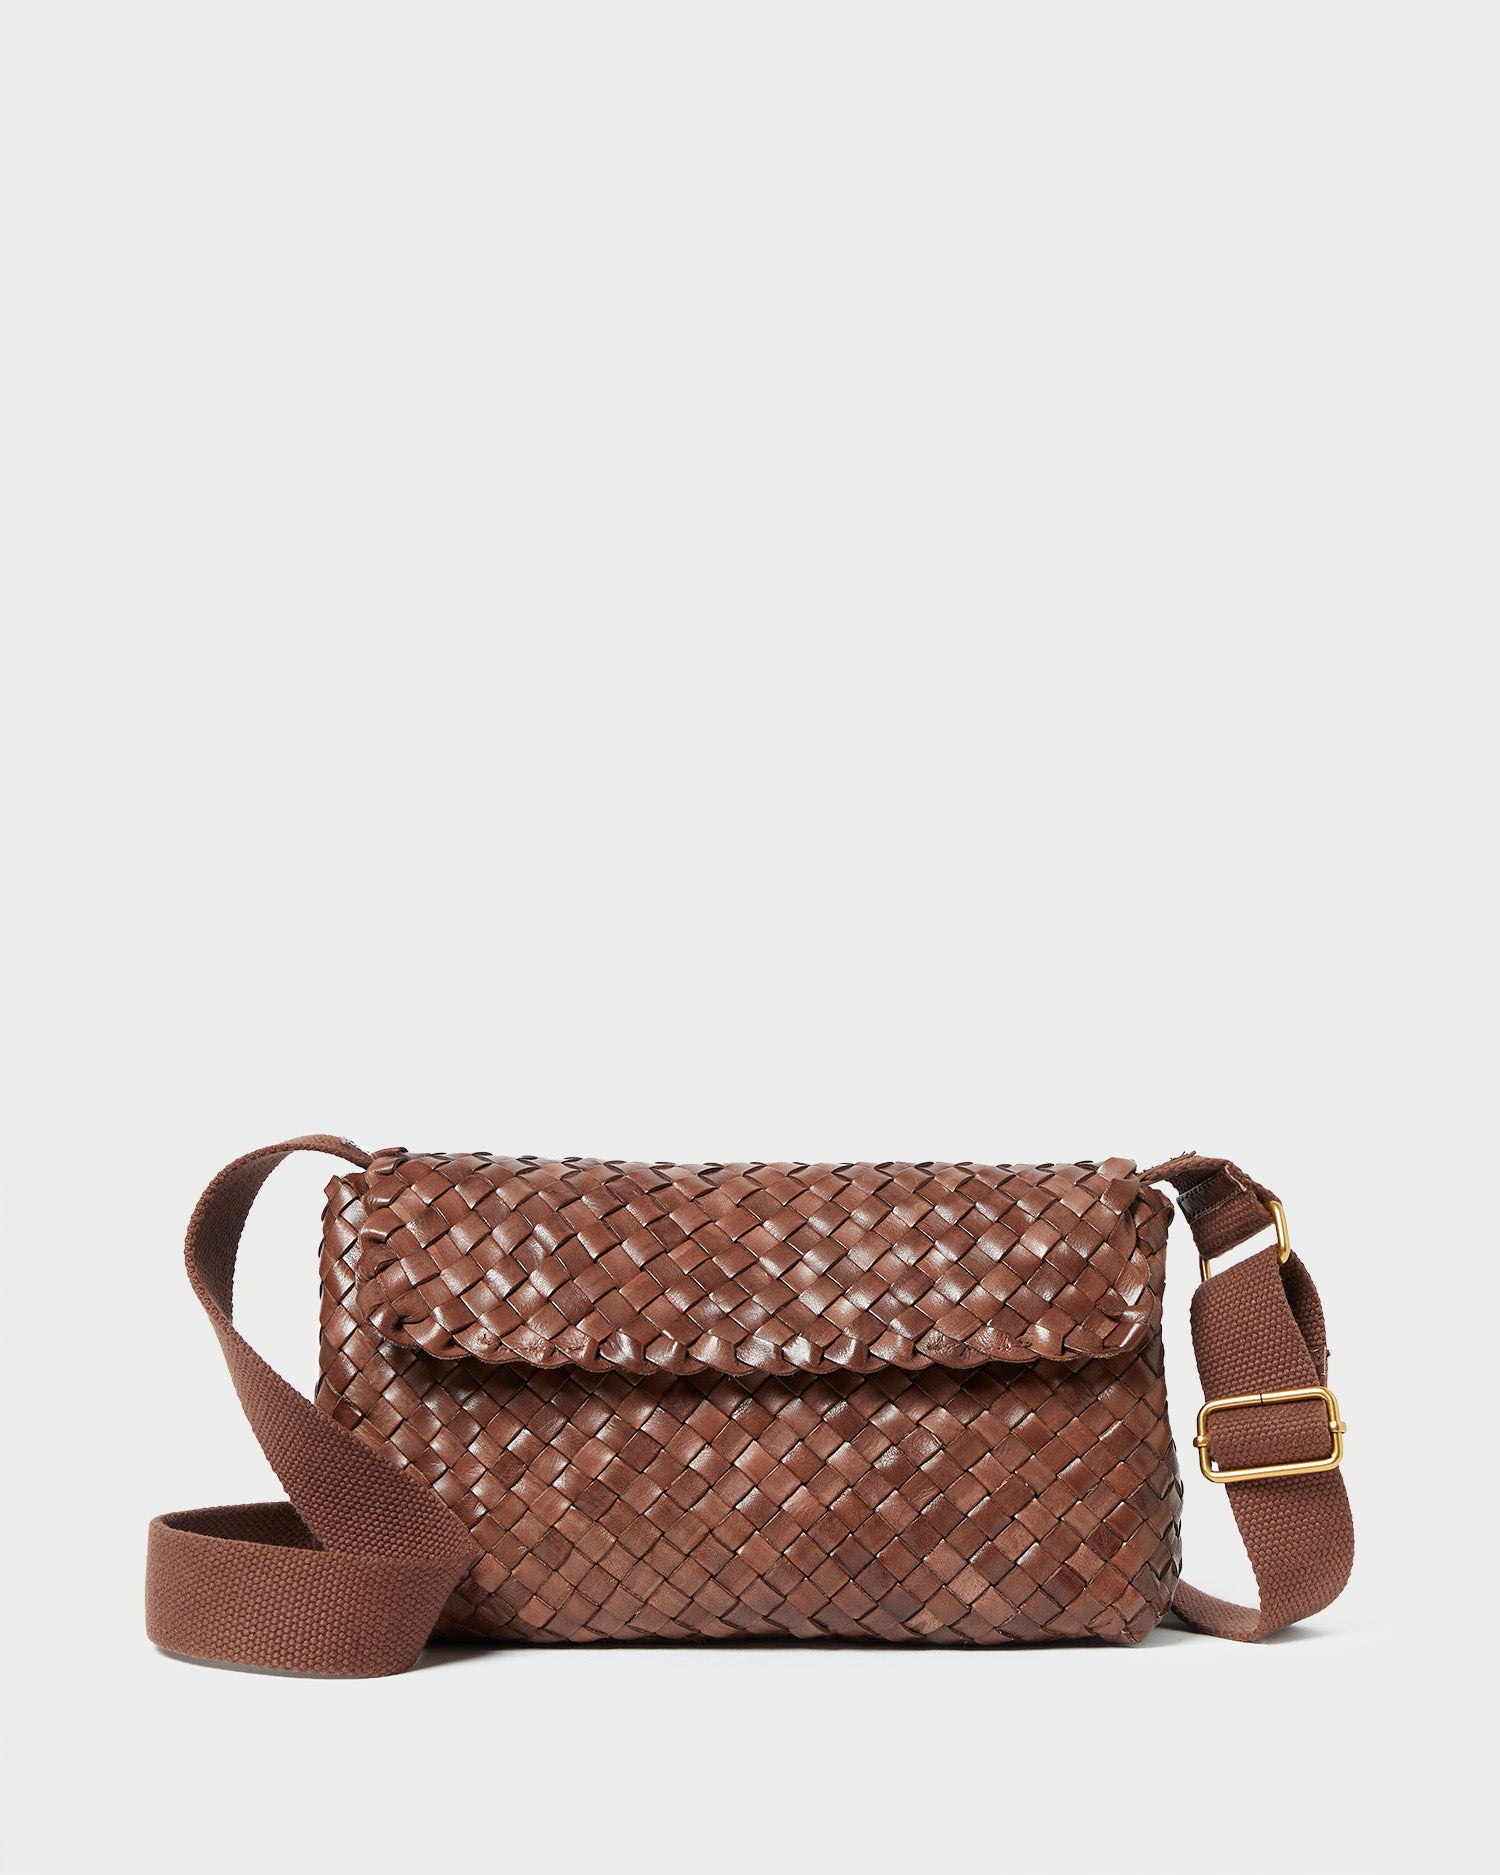 Leather Woven Shoulder Bag, Leather Handbags